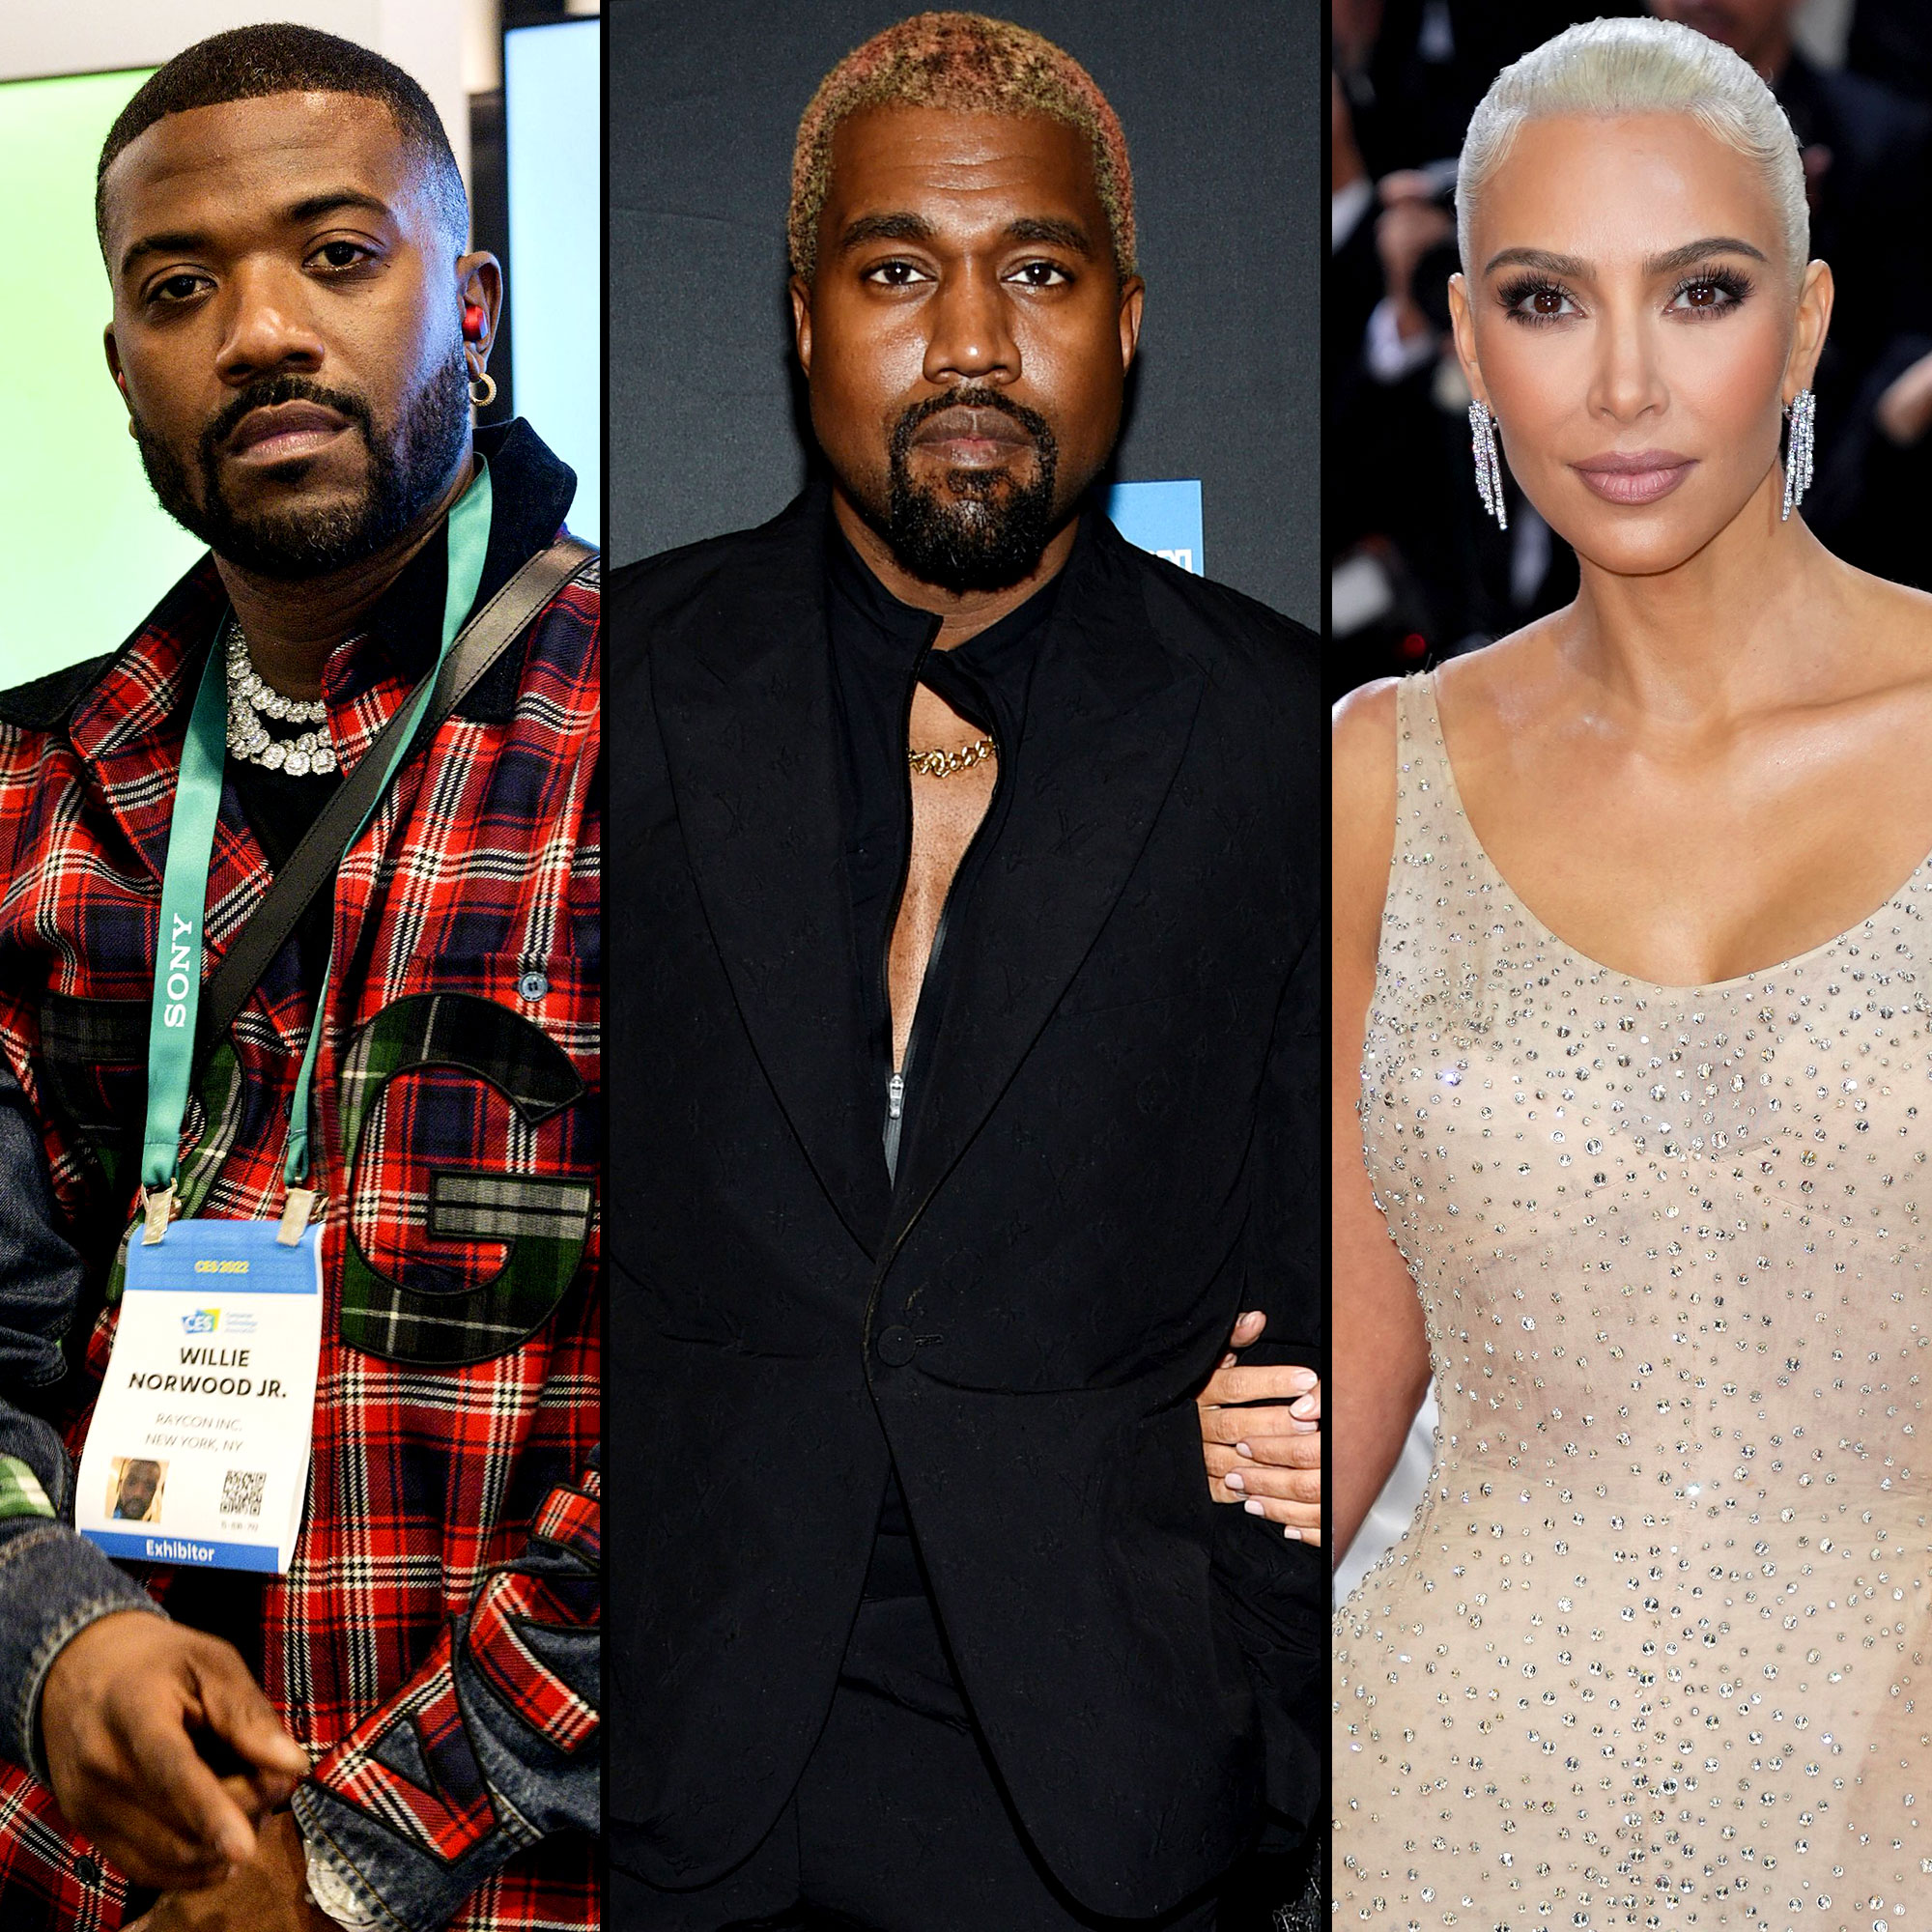 Celebrities: Kanye West wearing Air Jordan VI Retro Black-Infra